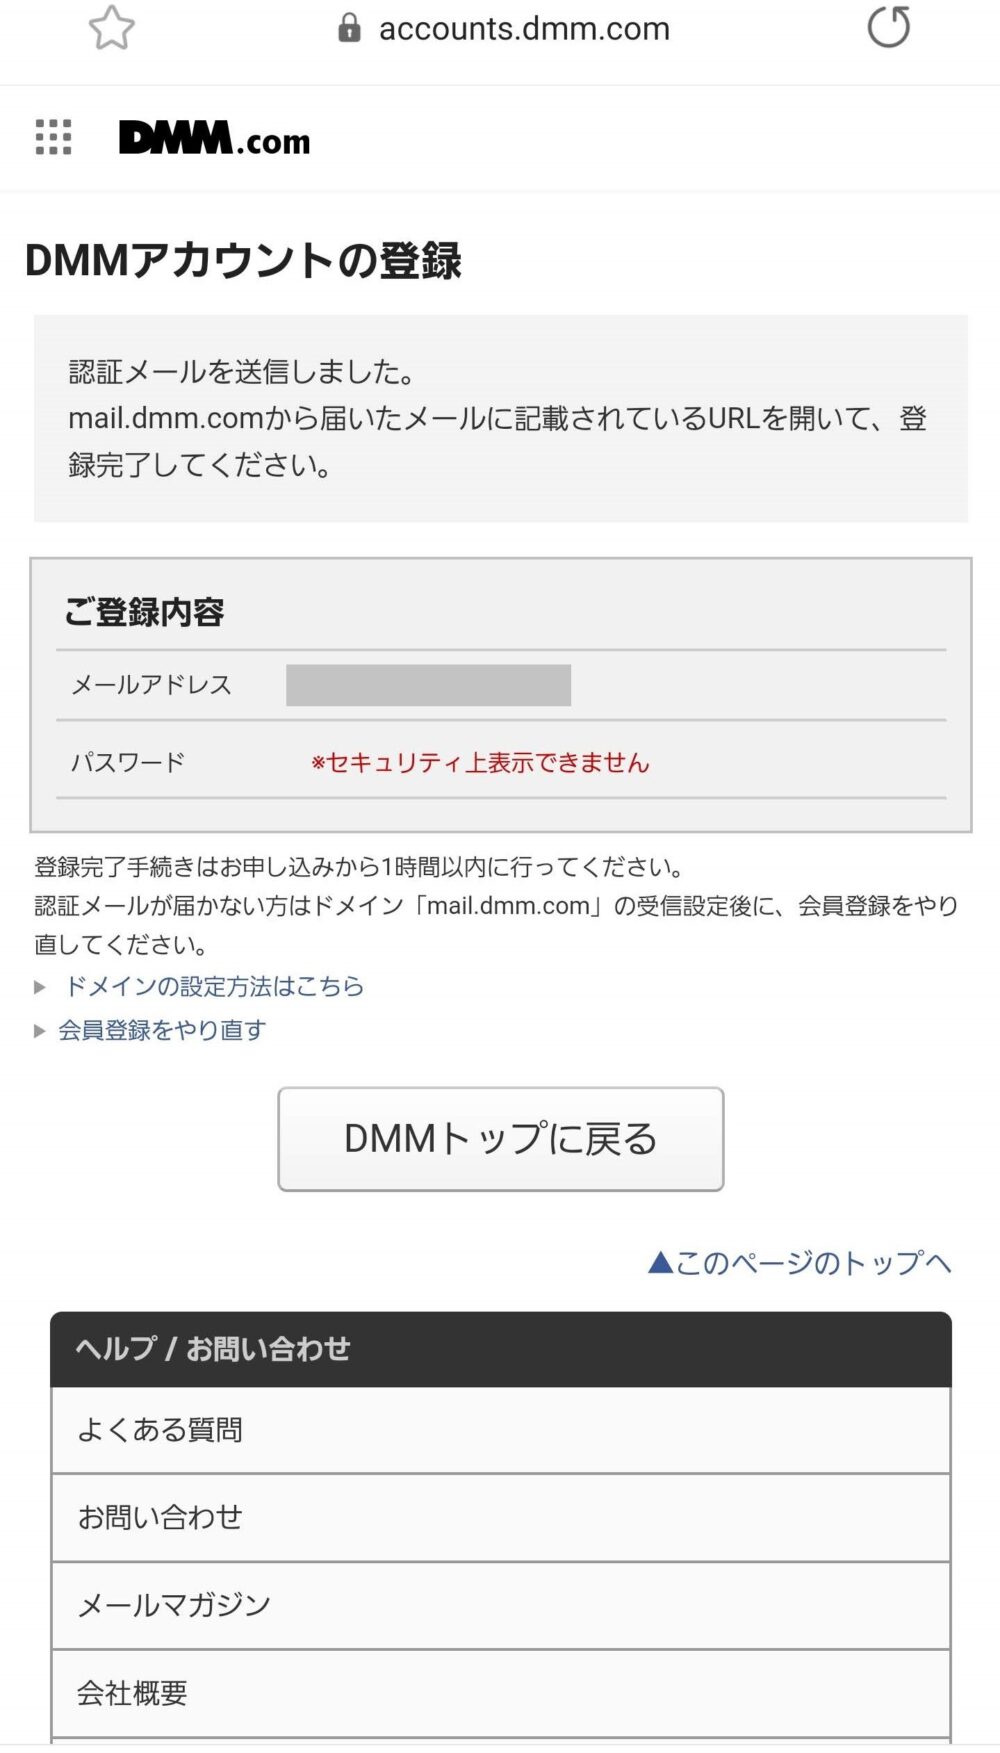 DMM英会話の公式サイトキャプチャ - 登録手順④